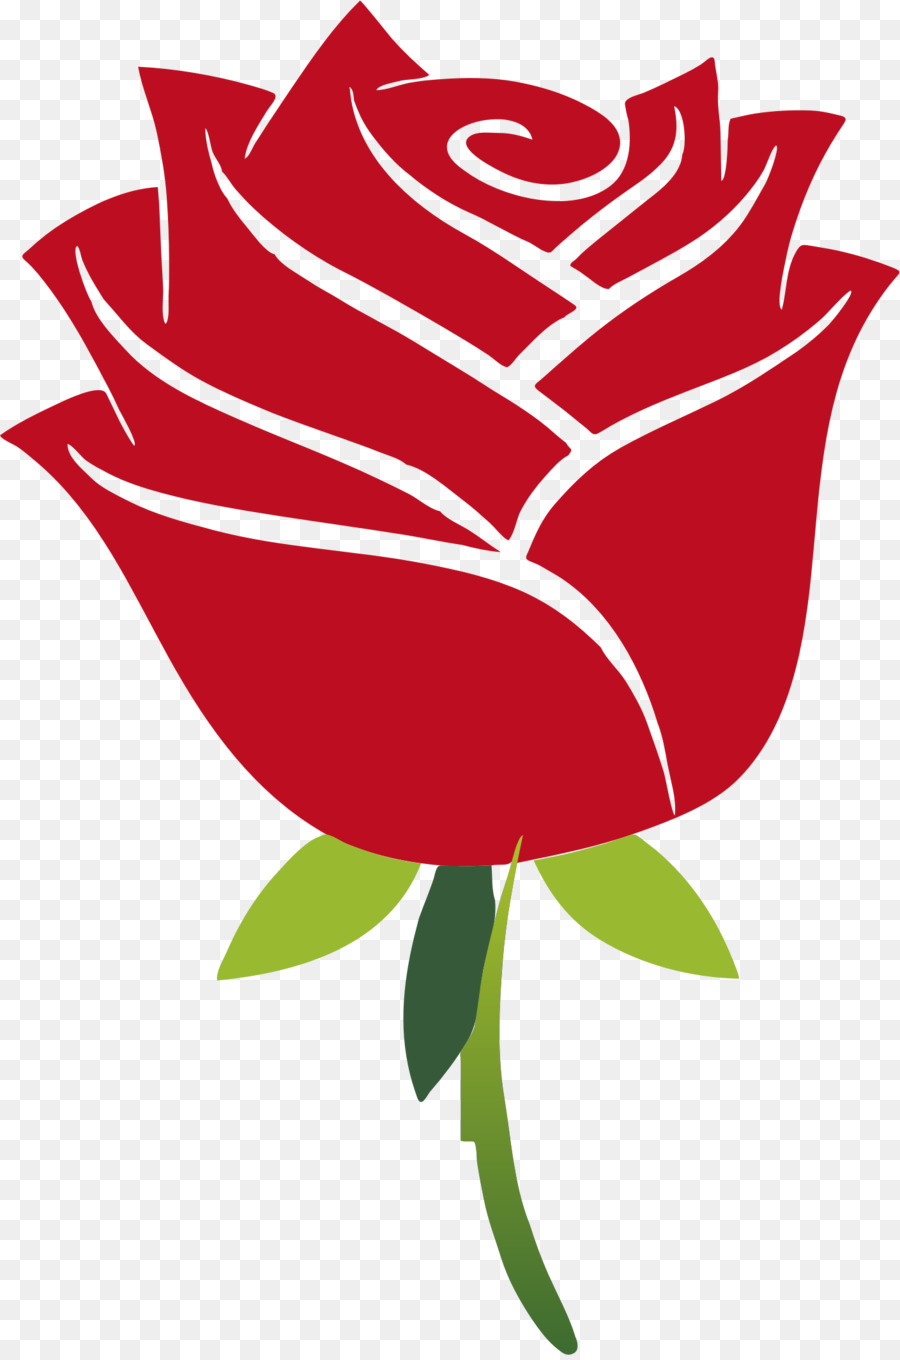 Rose Clip art - rose vector png download - 1409*2122 - Free Transparent Rose png Download.